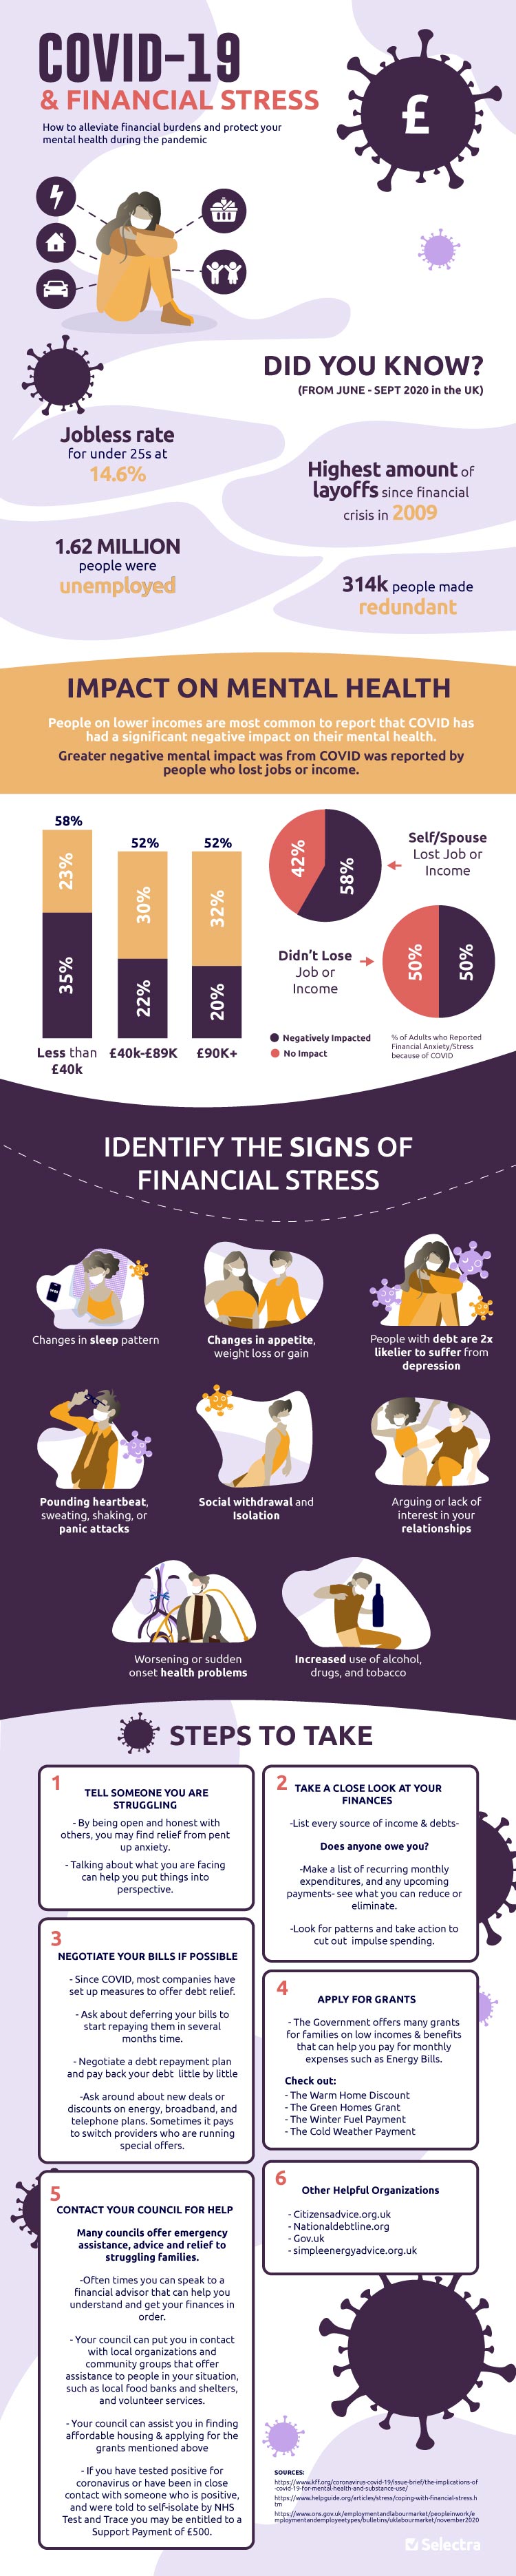 COVID-19 & Financial Stress